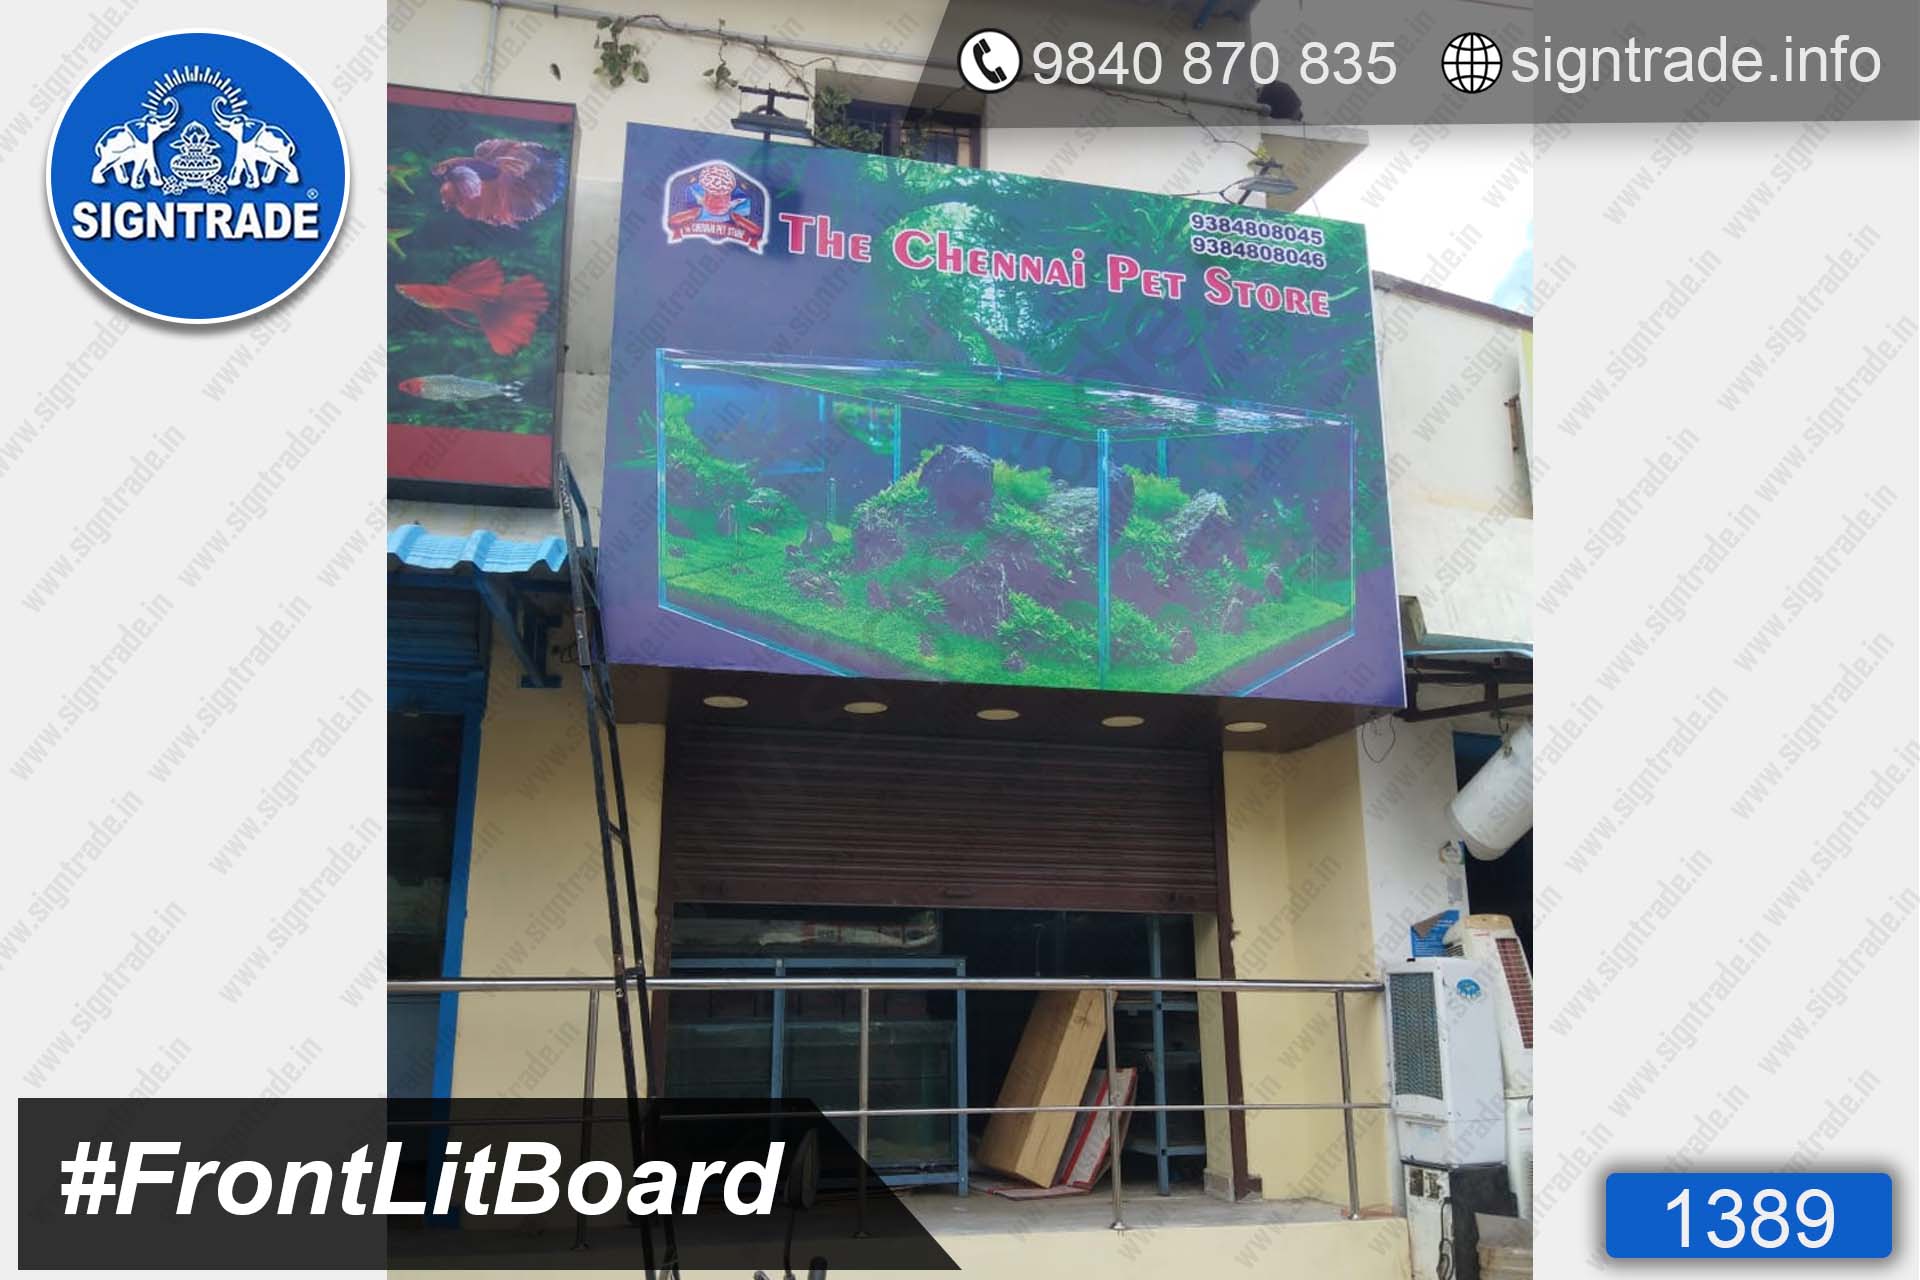 The Chennai Pet Store - 1389, Flex Board, Frontlit Flex Board, Star Frontlit Flex Board, Frontlit Flex Banners, Shop Front Flex Board, Shop Flex Board